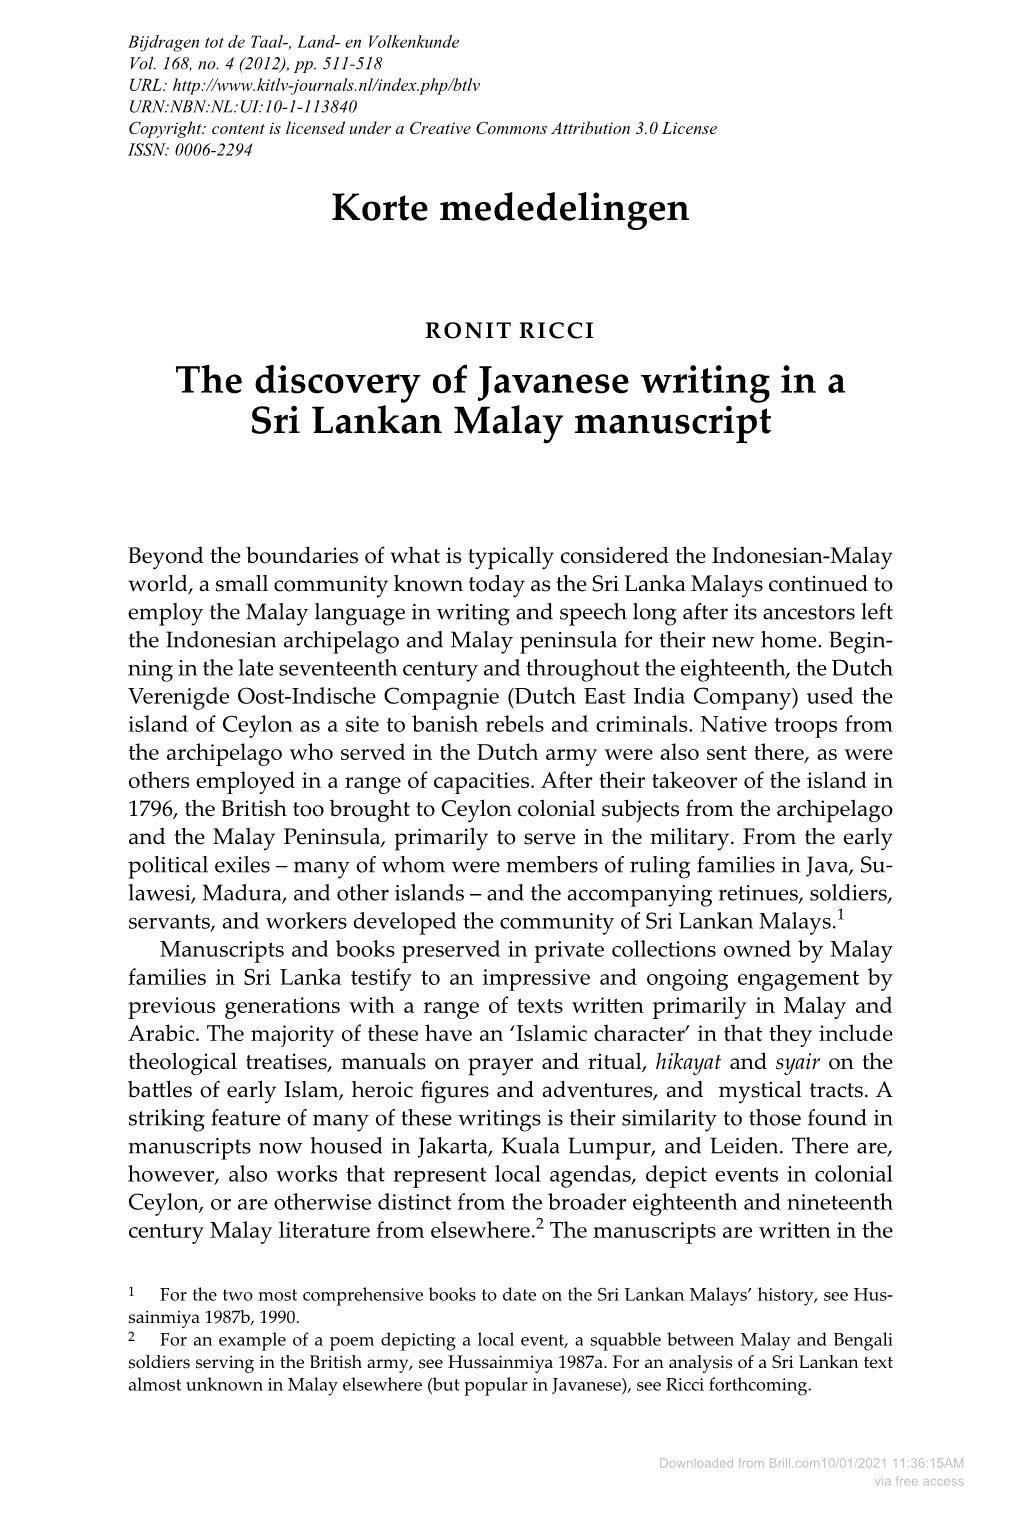 Korte Mededelingen the Discovery of Javanese Writing in a Sri